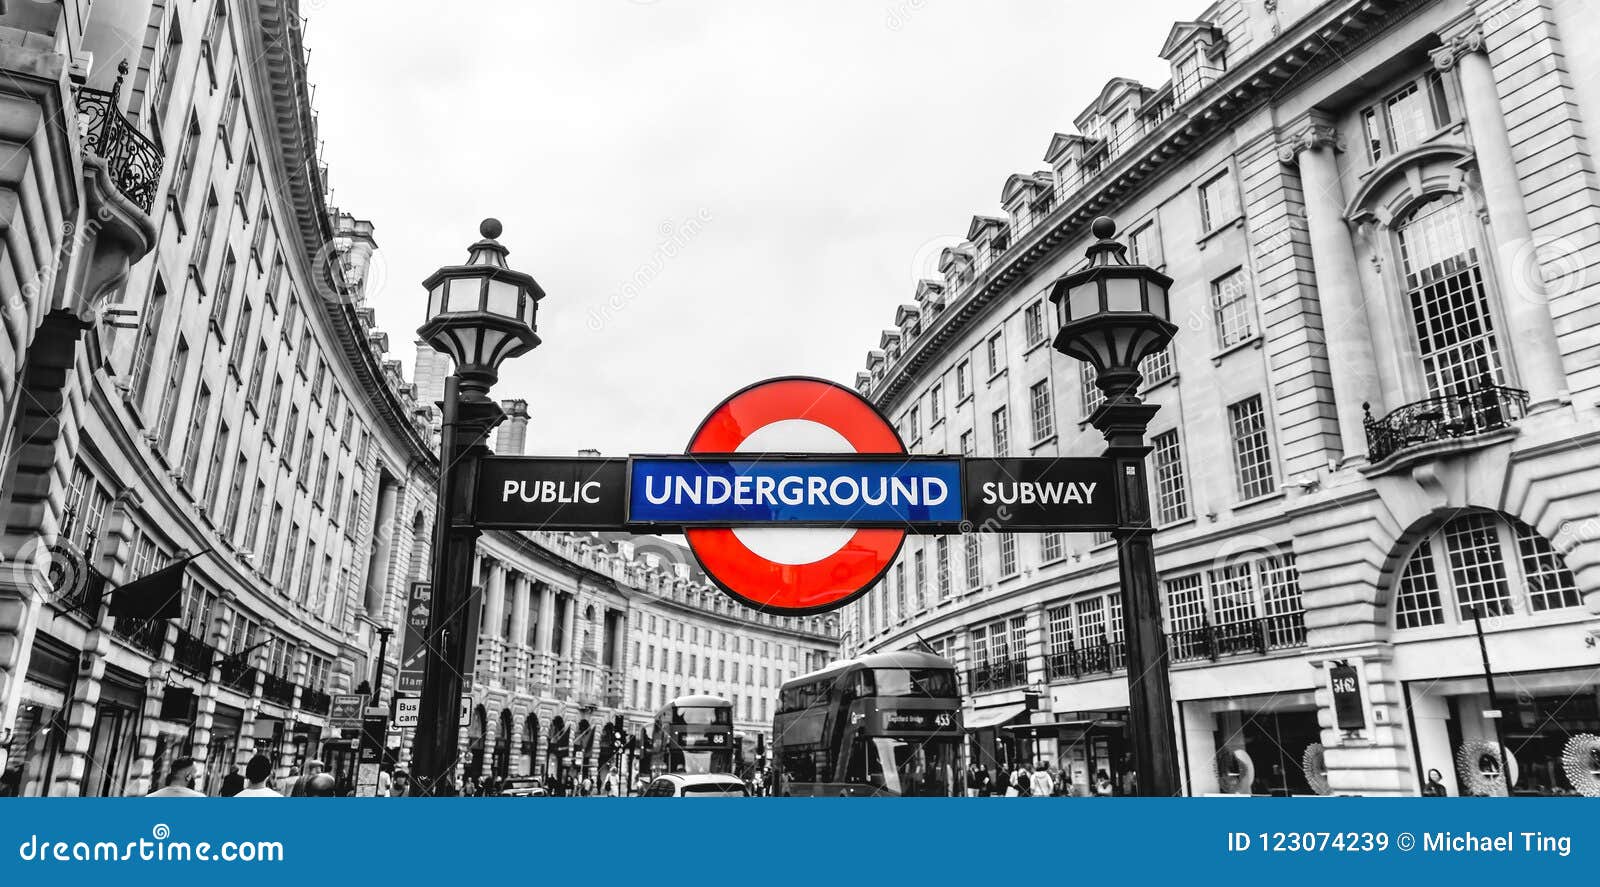 Piccadilly Circus Station Underground Tube Street Signage London